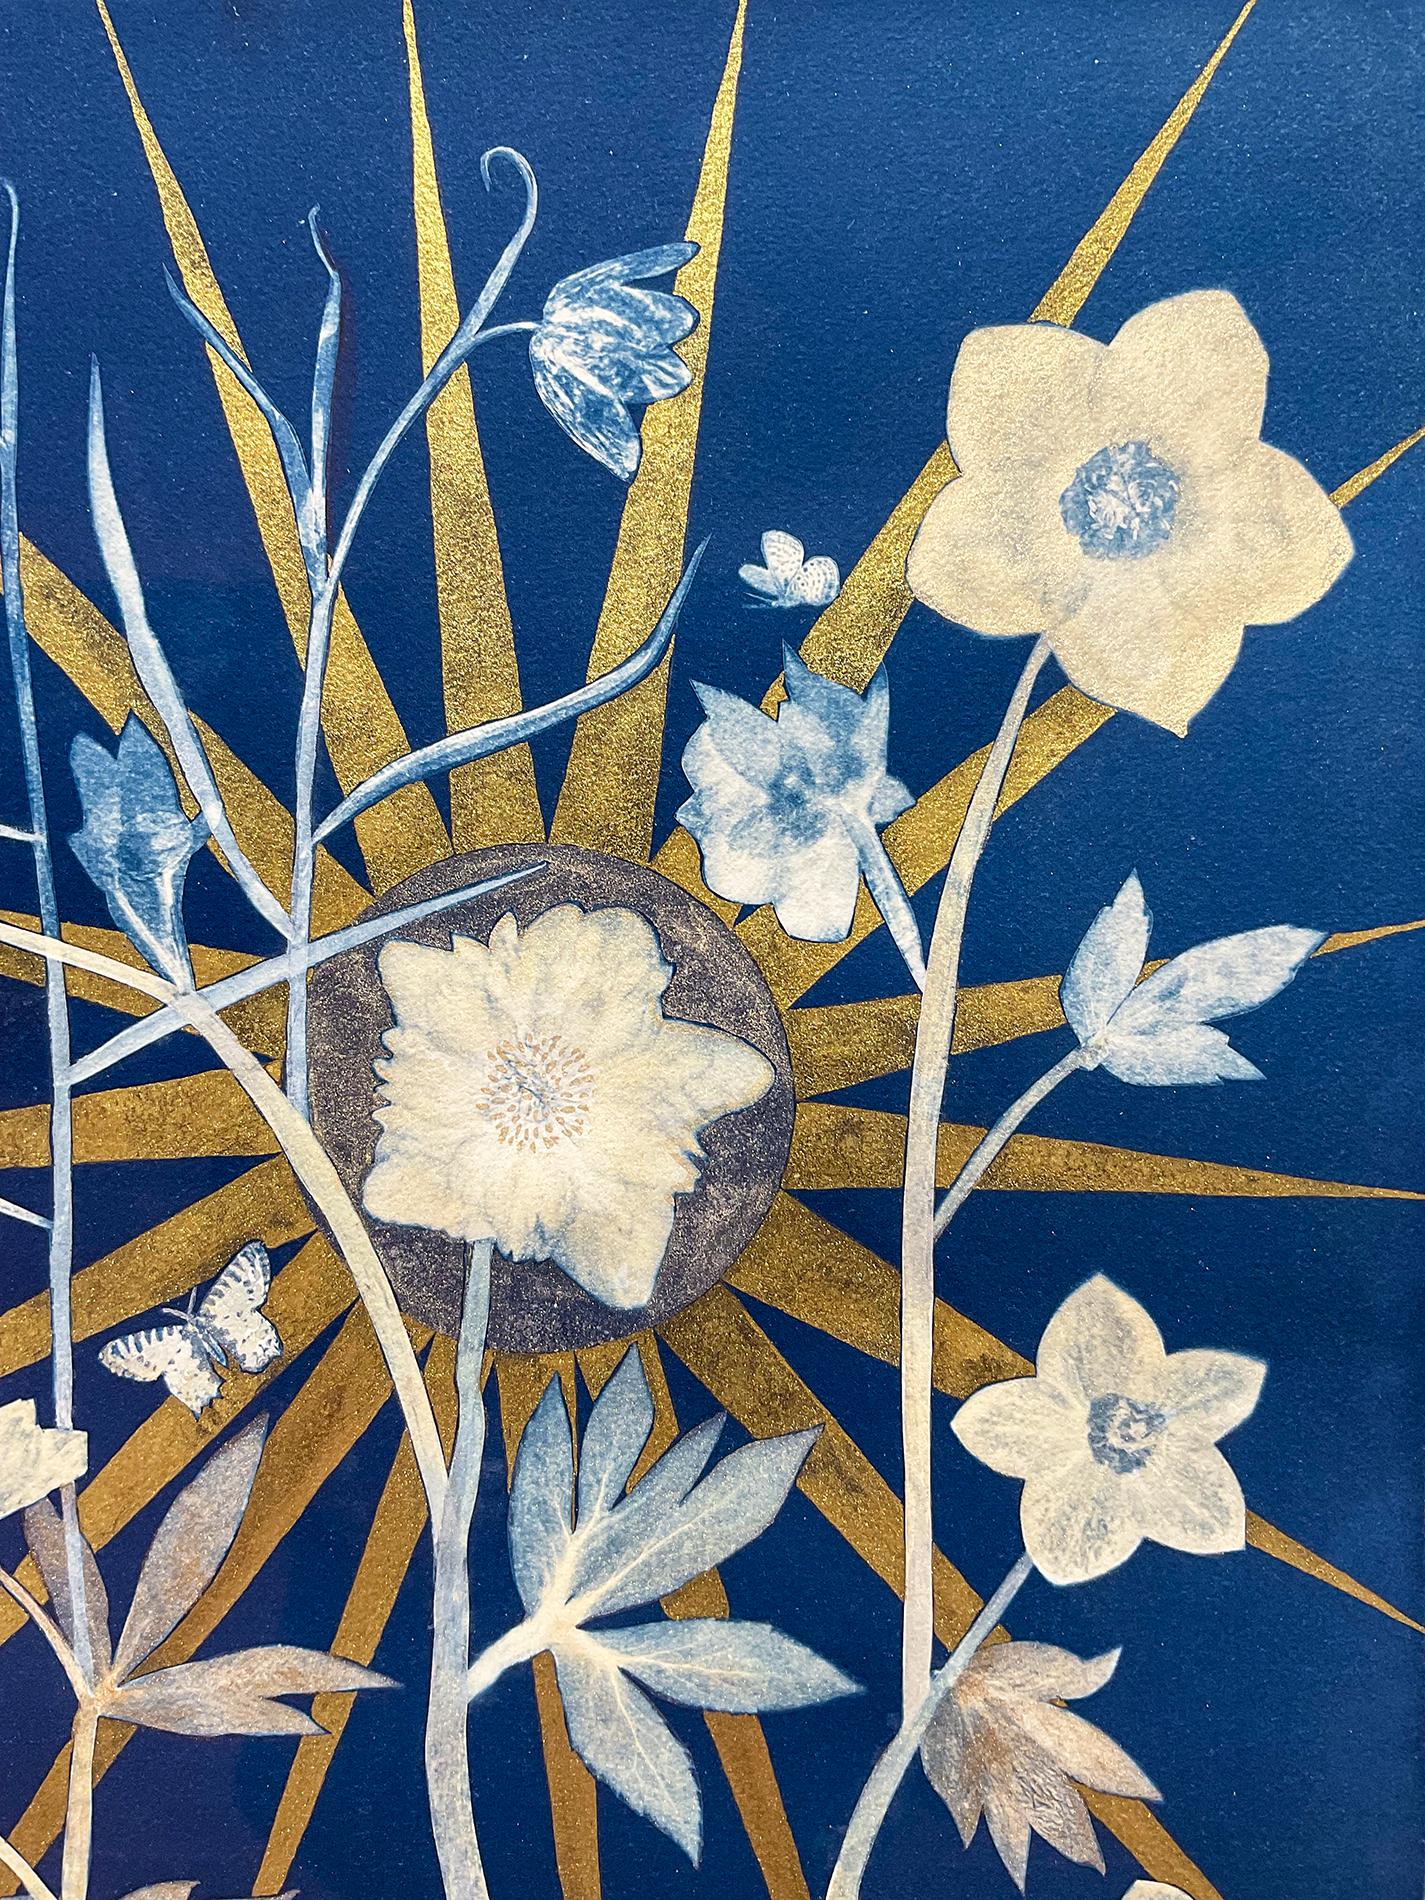 Hellebore, Center Star (Still Life of Golden Sunburst, White Flowers on Indigo) - Contemporary Painting by Julia Whitney Barnes